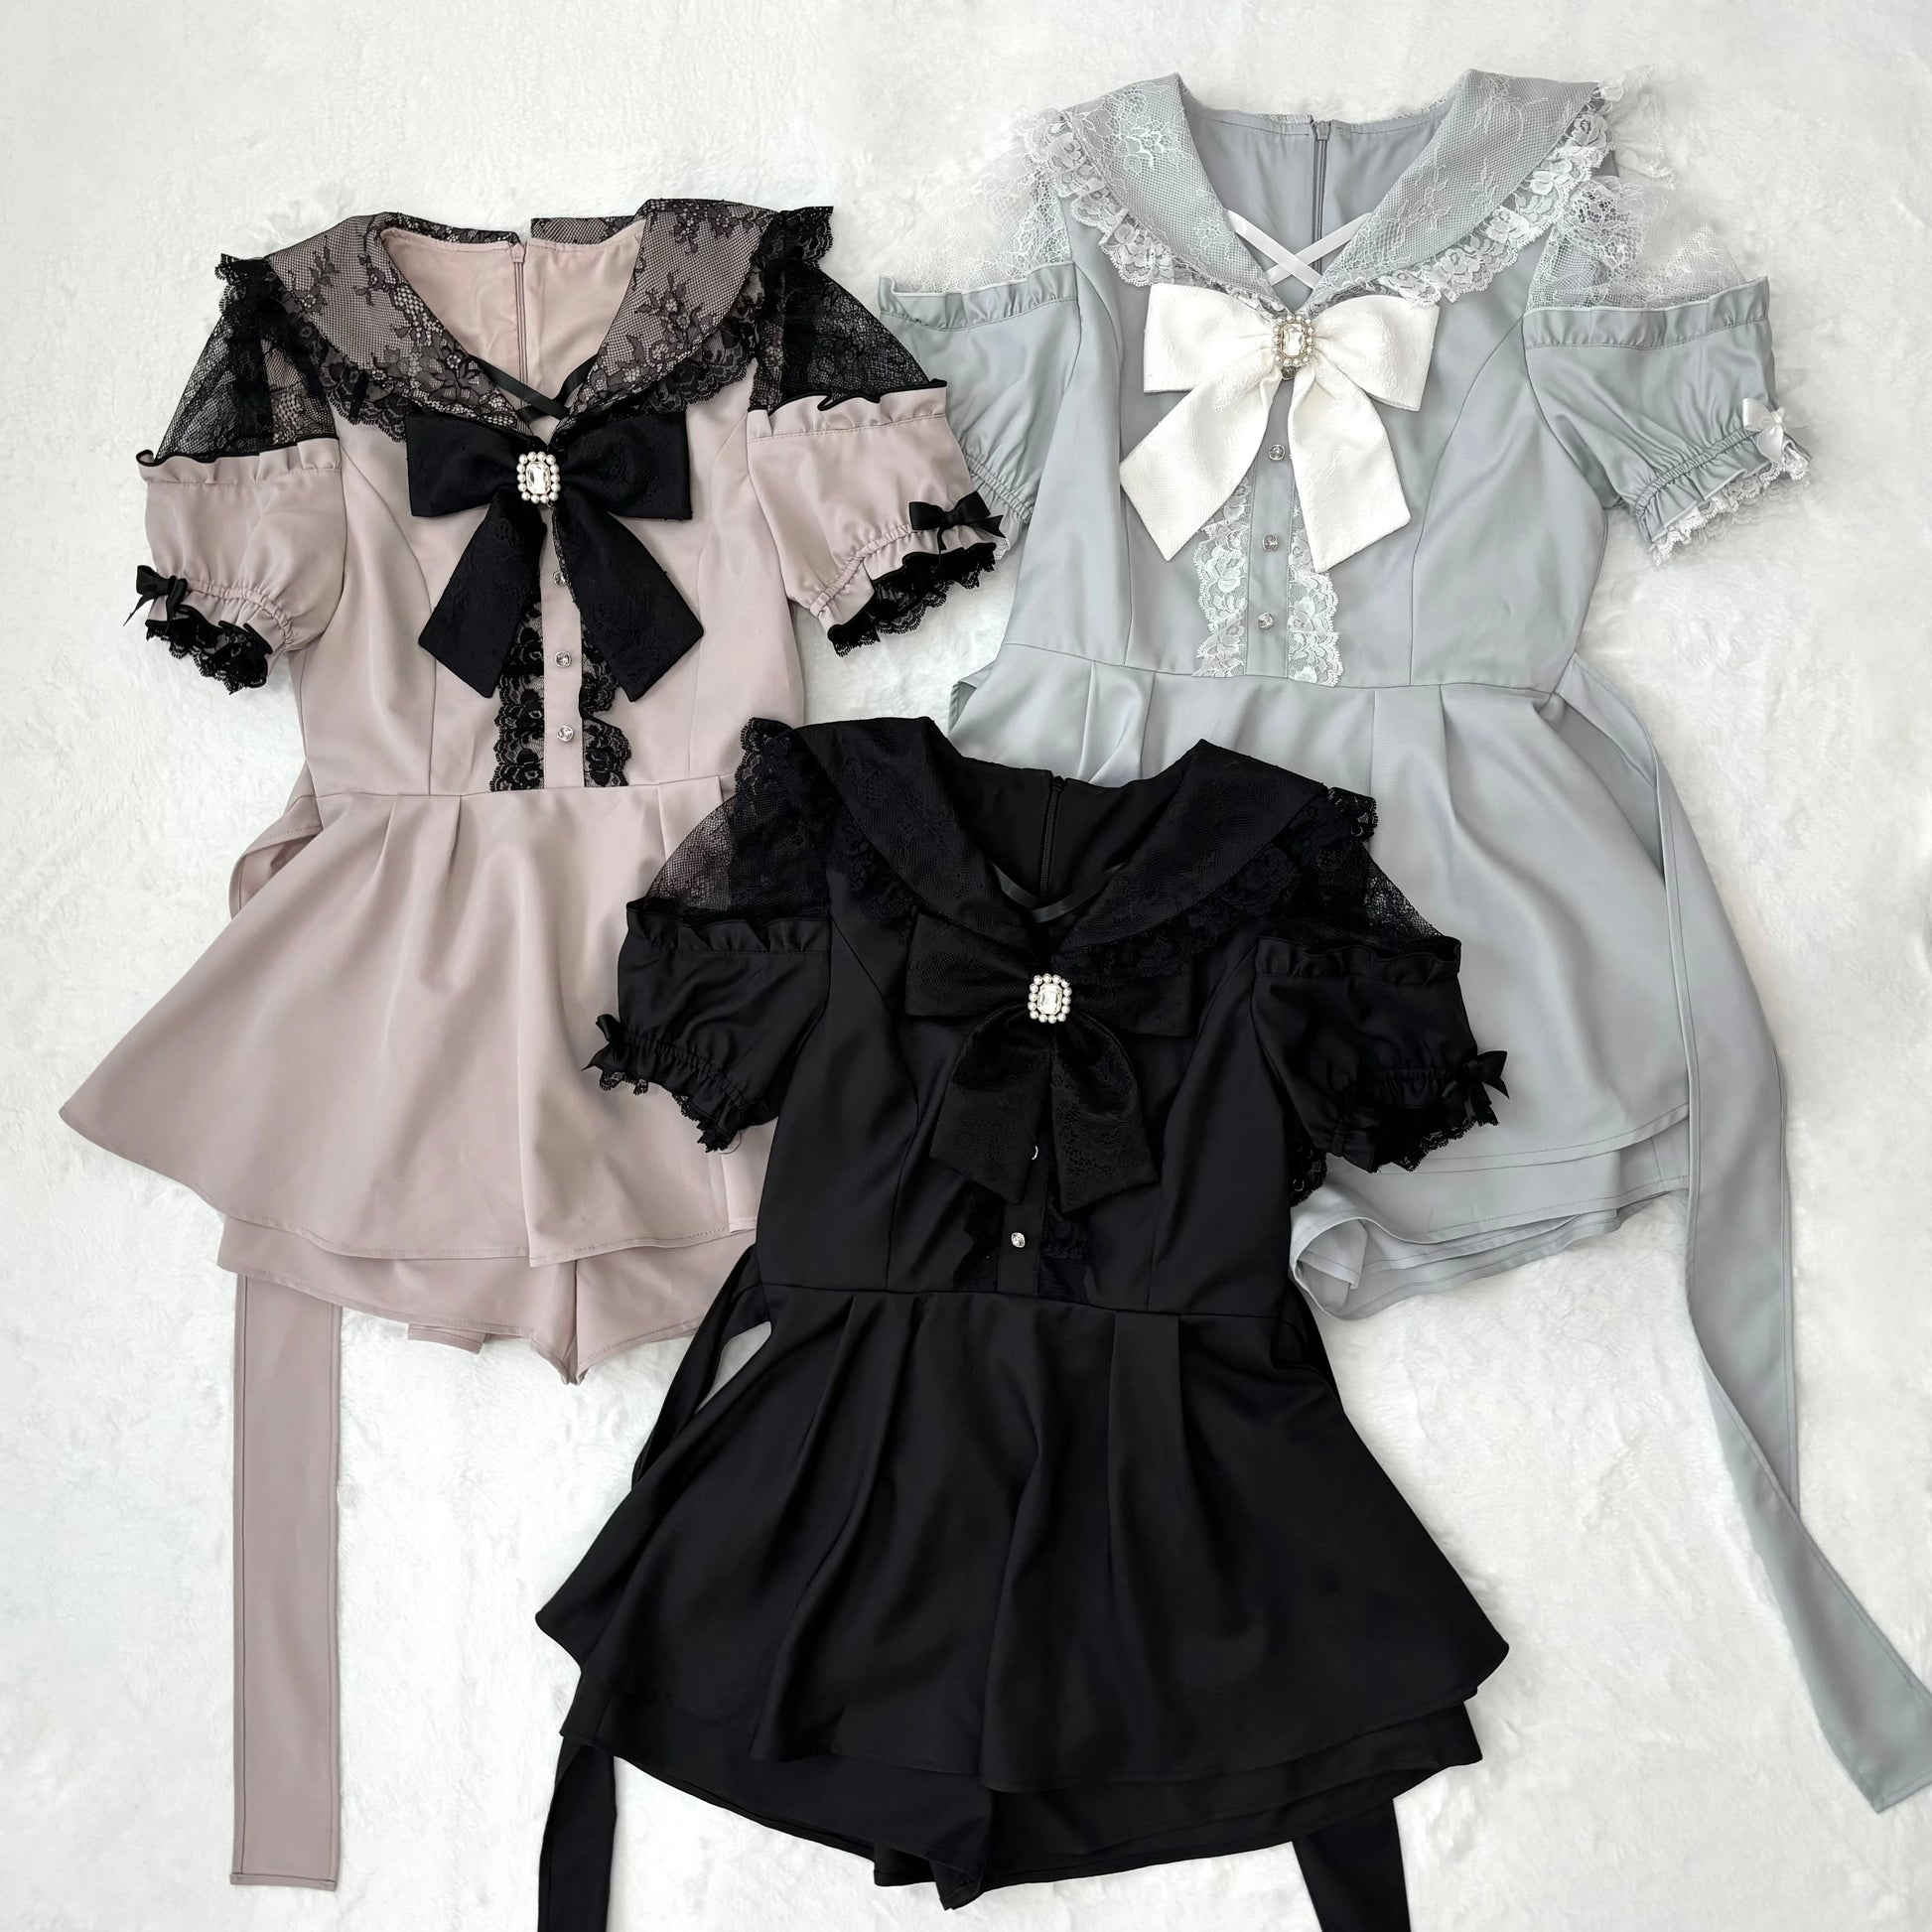 Jirai Kei Dress Set Pink Black Open-Shoulder Winged Collar Dress 37660:578002